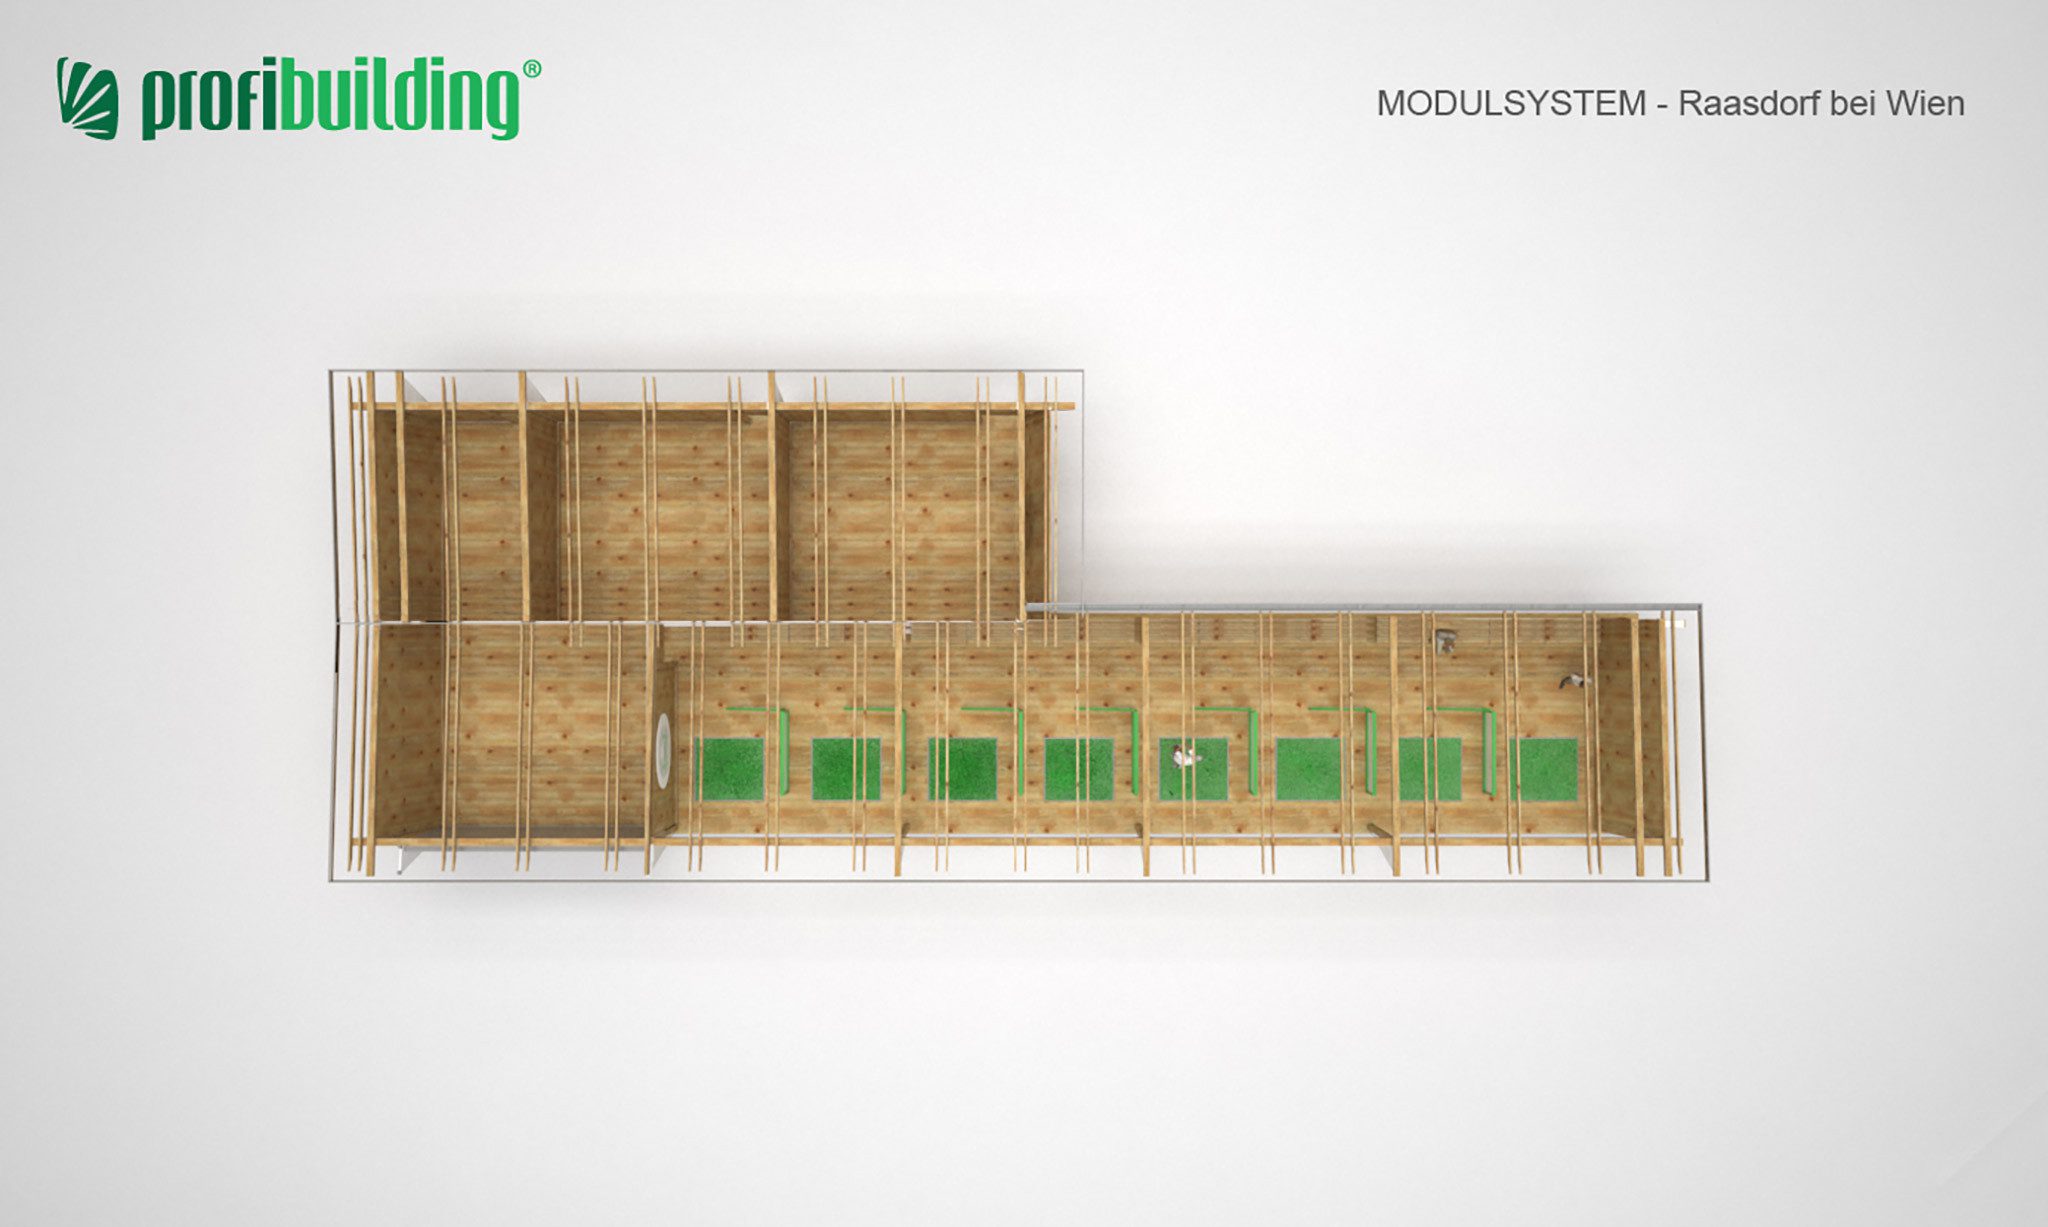 Animated presentations - Profibuilding - Raasdorf golf Modulsystem